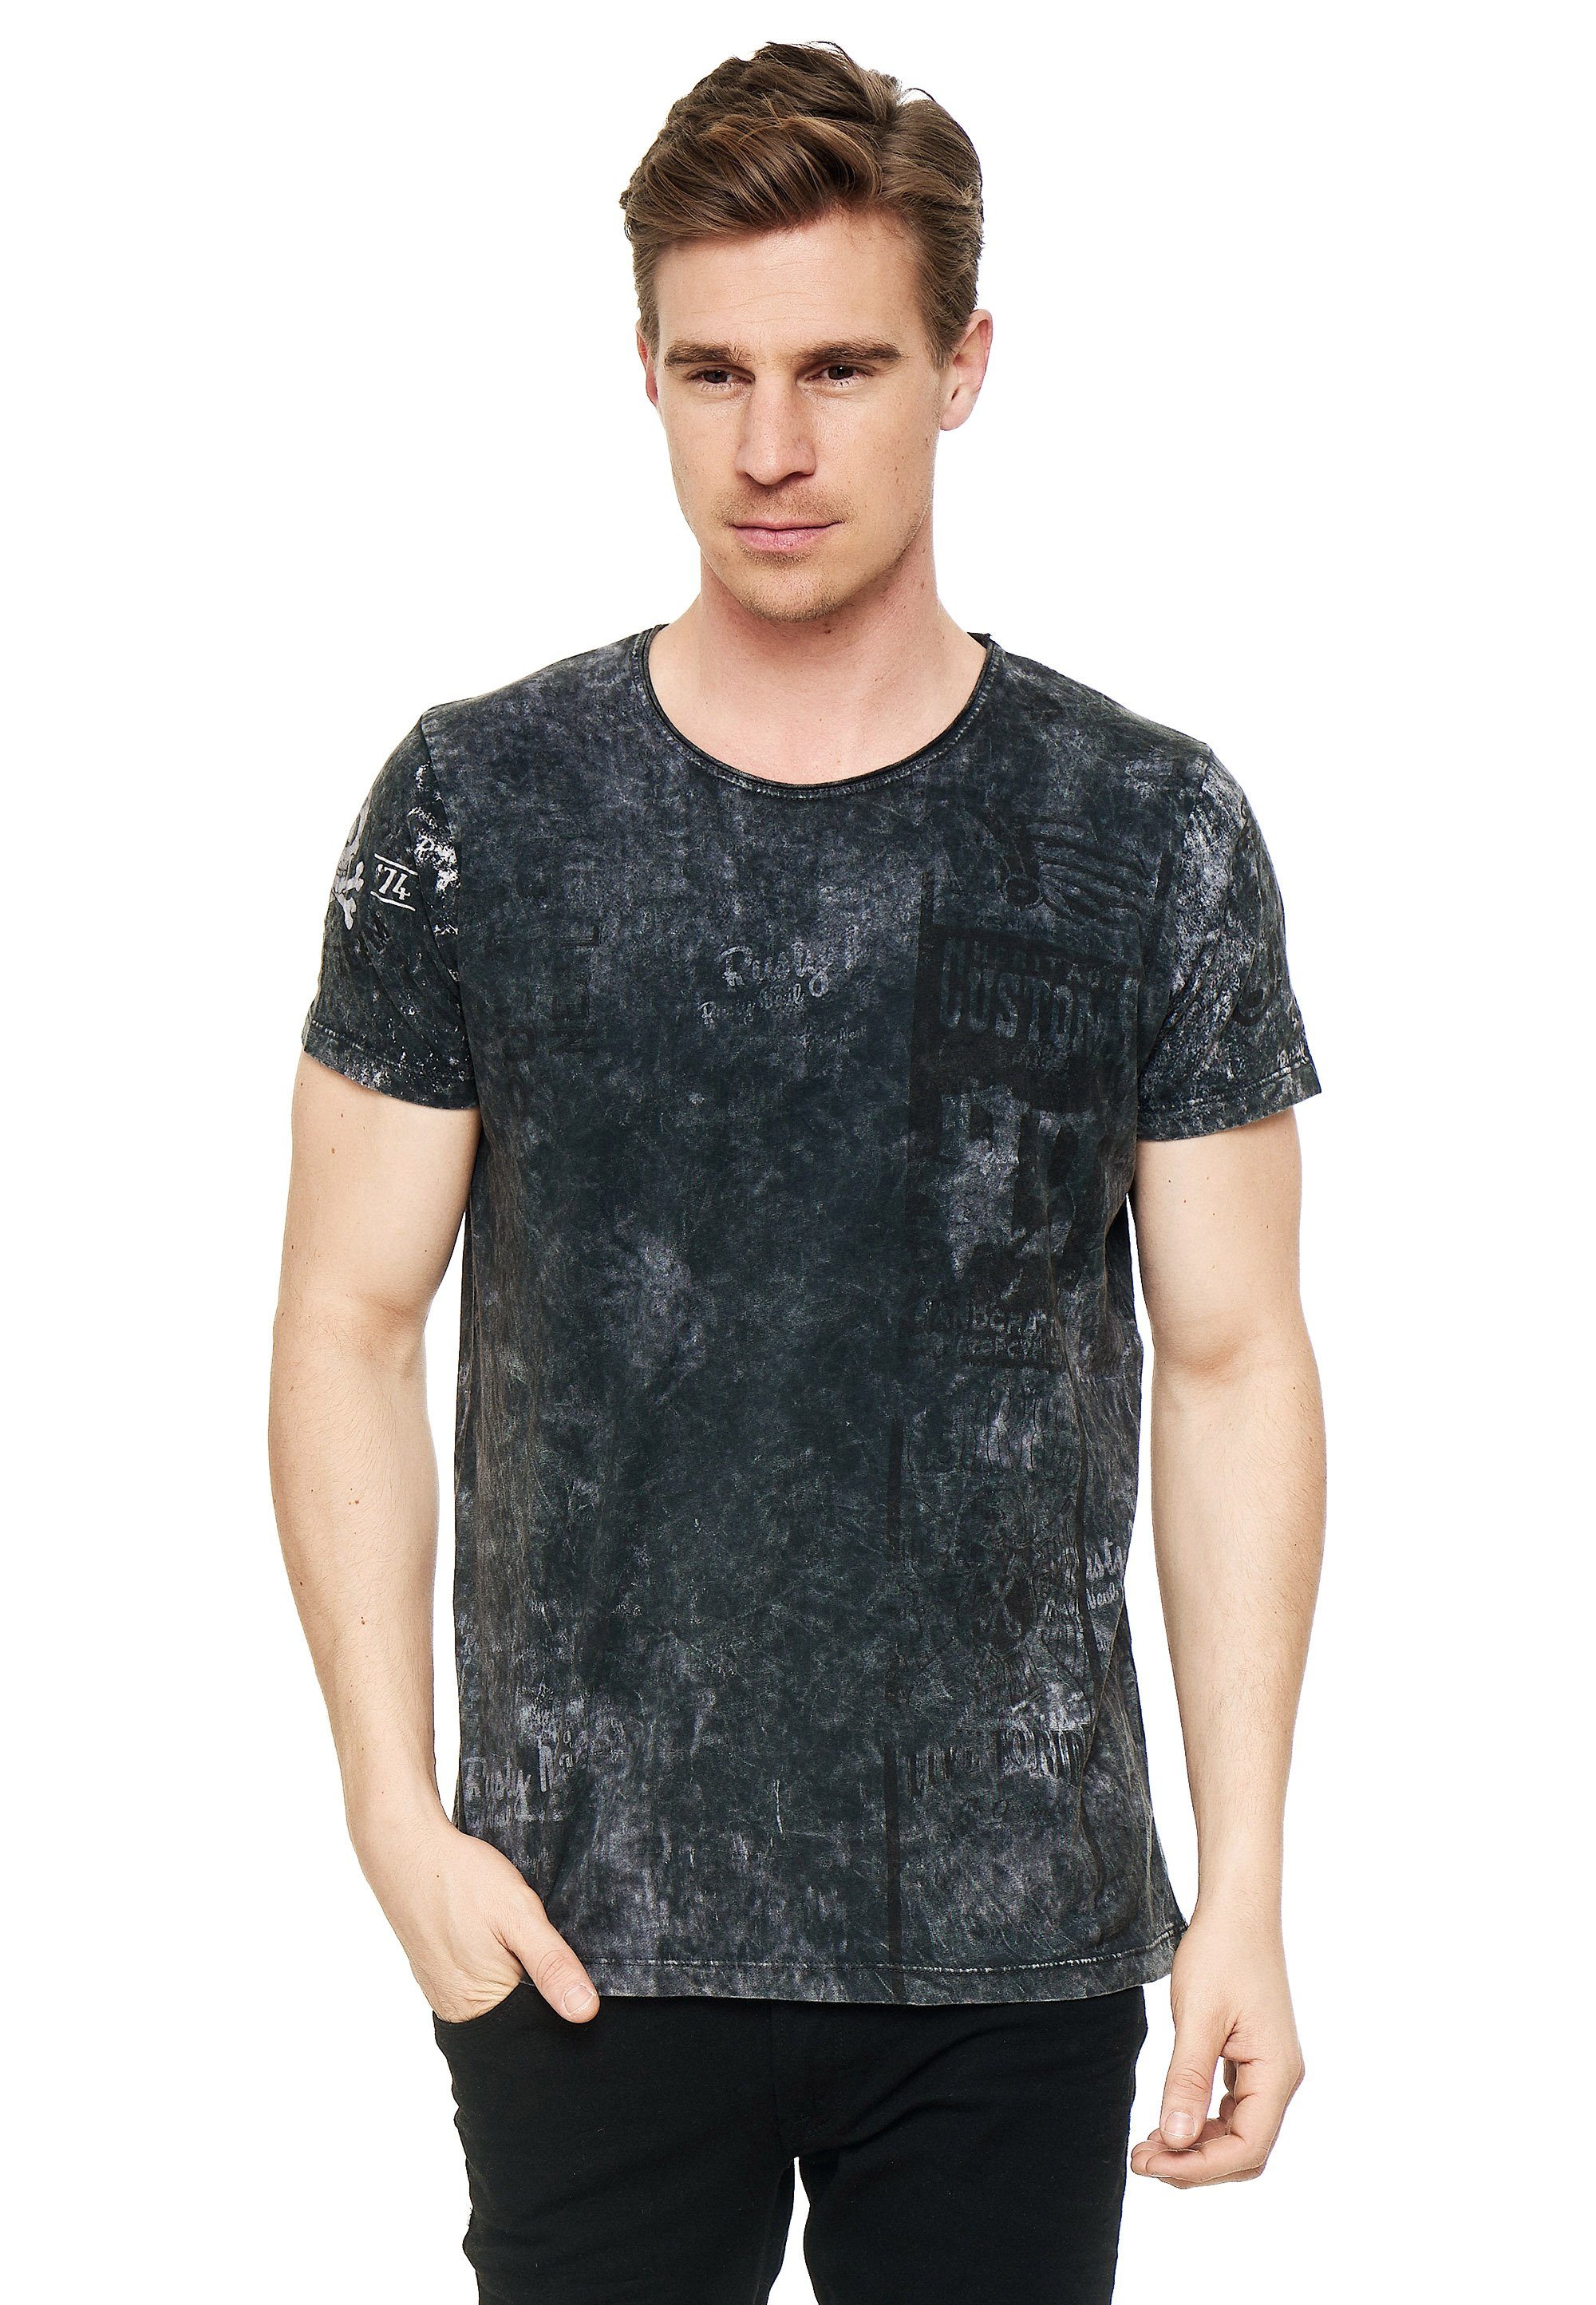 T-Shirt Neal Rusty modernem mit Print anthrazit